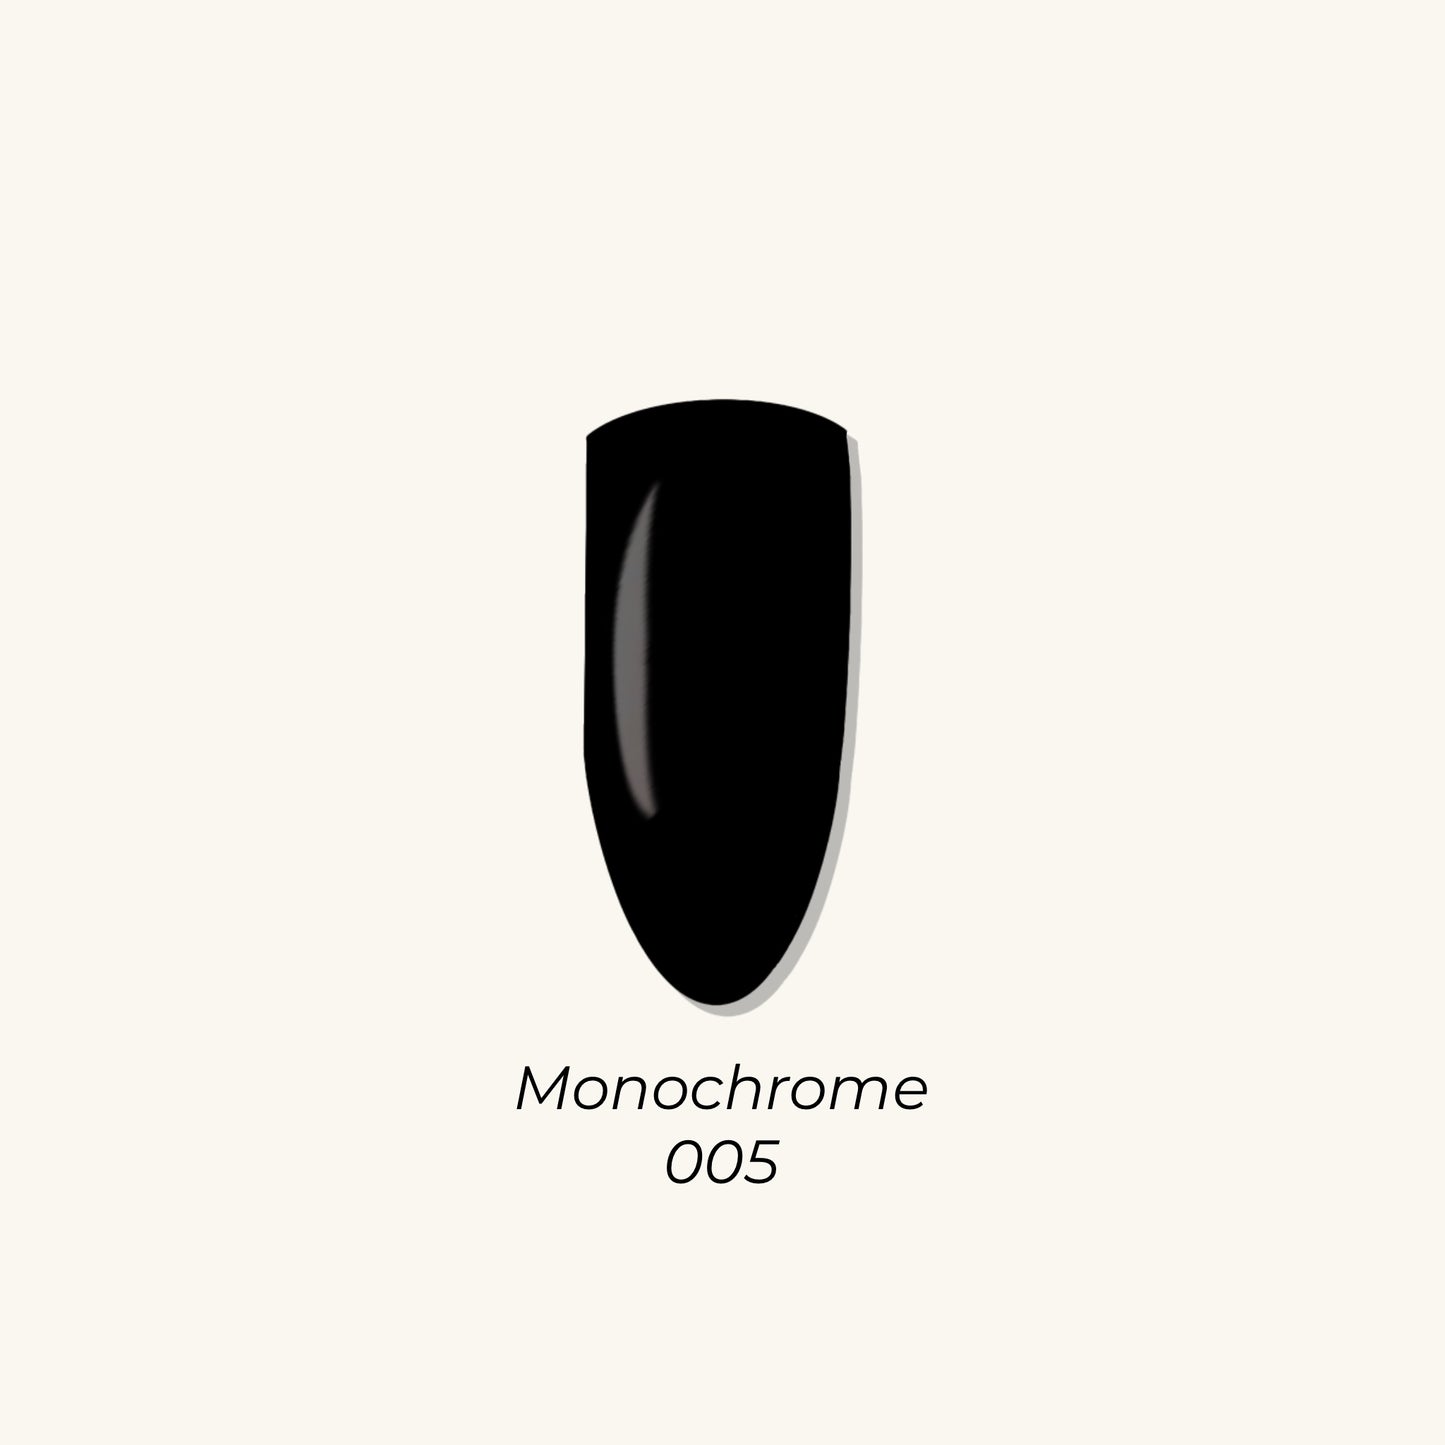 Monochrome 005